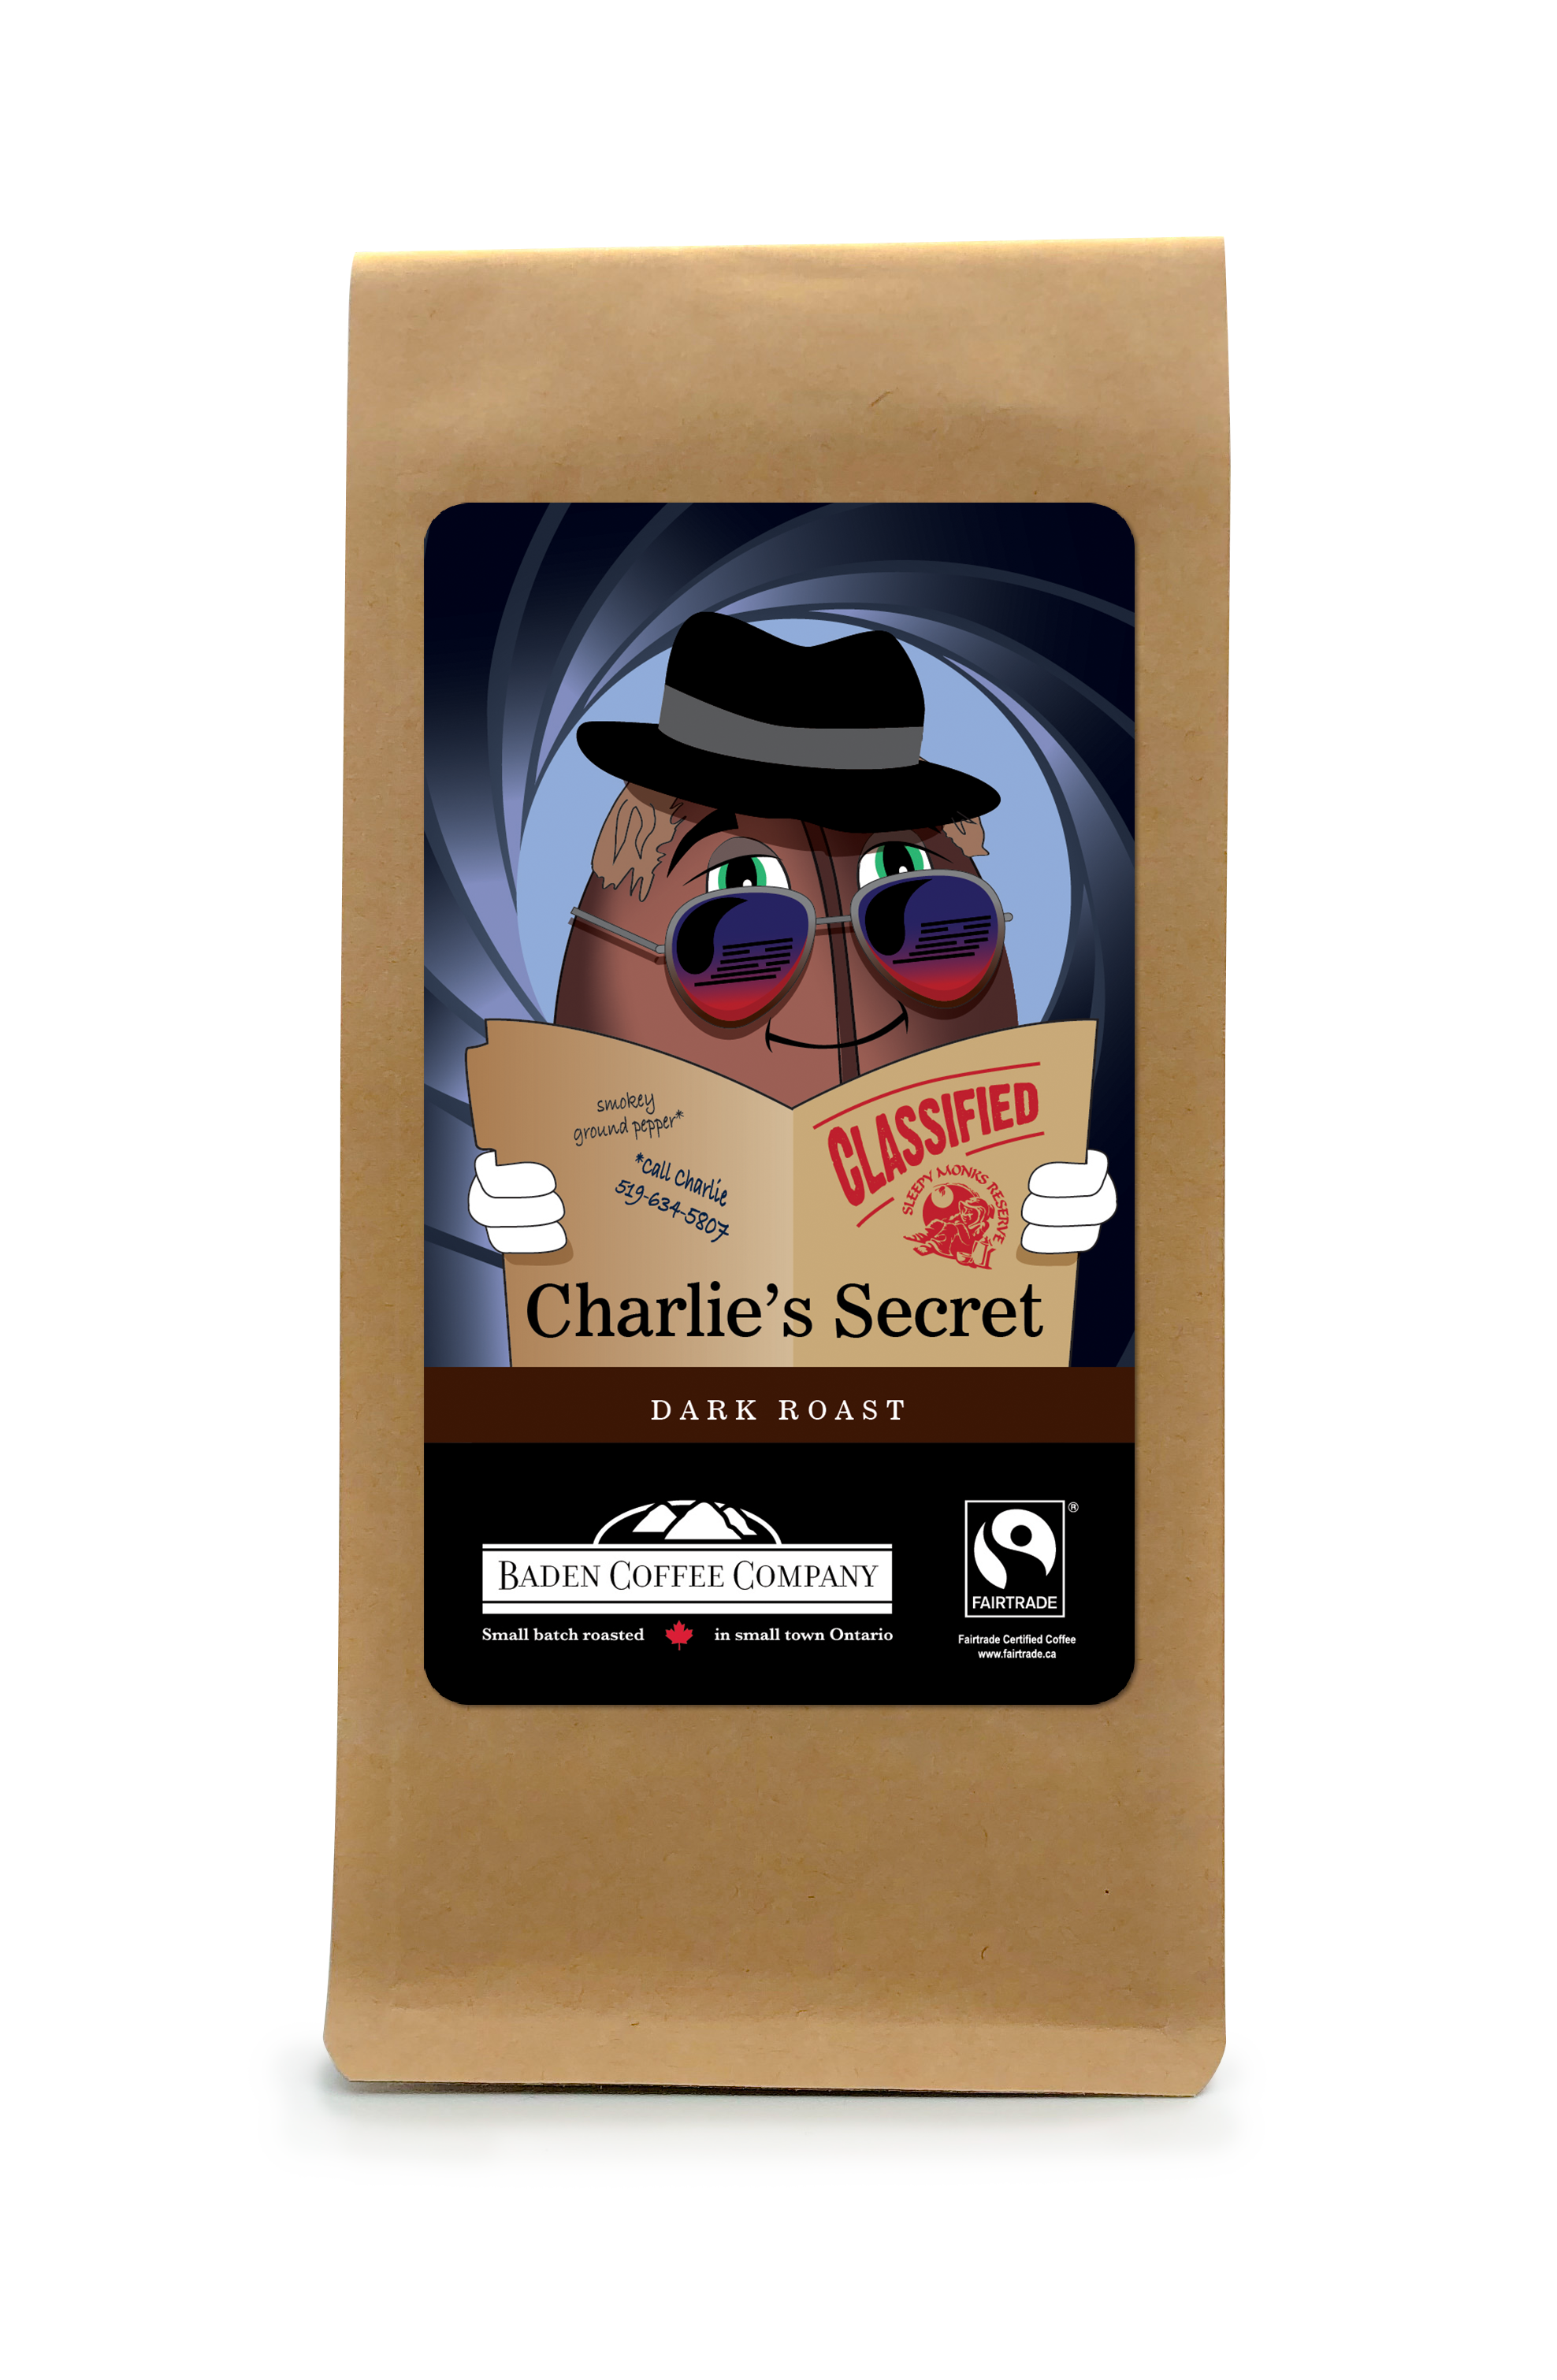 Charlie's Secret